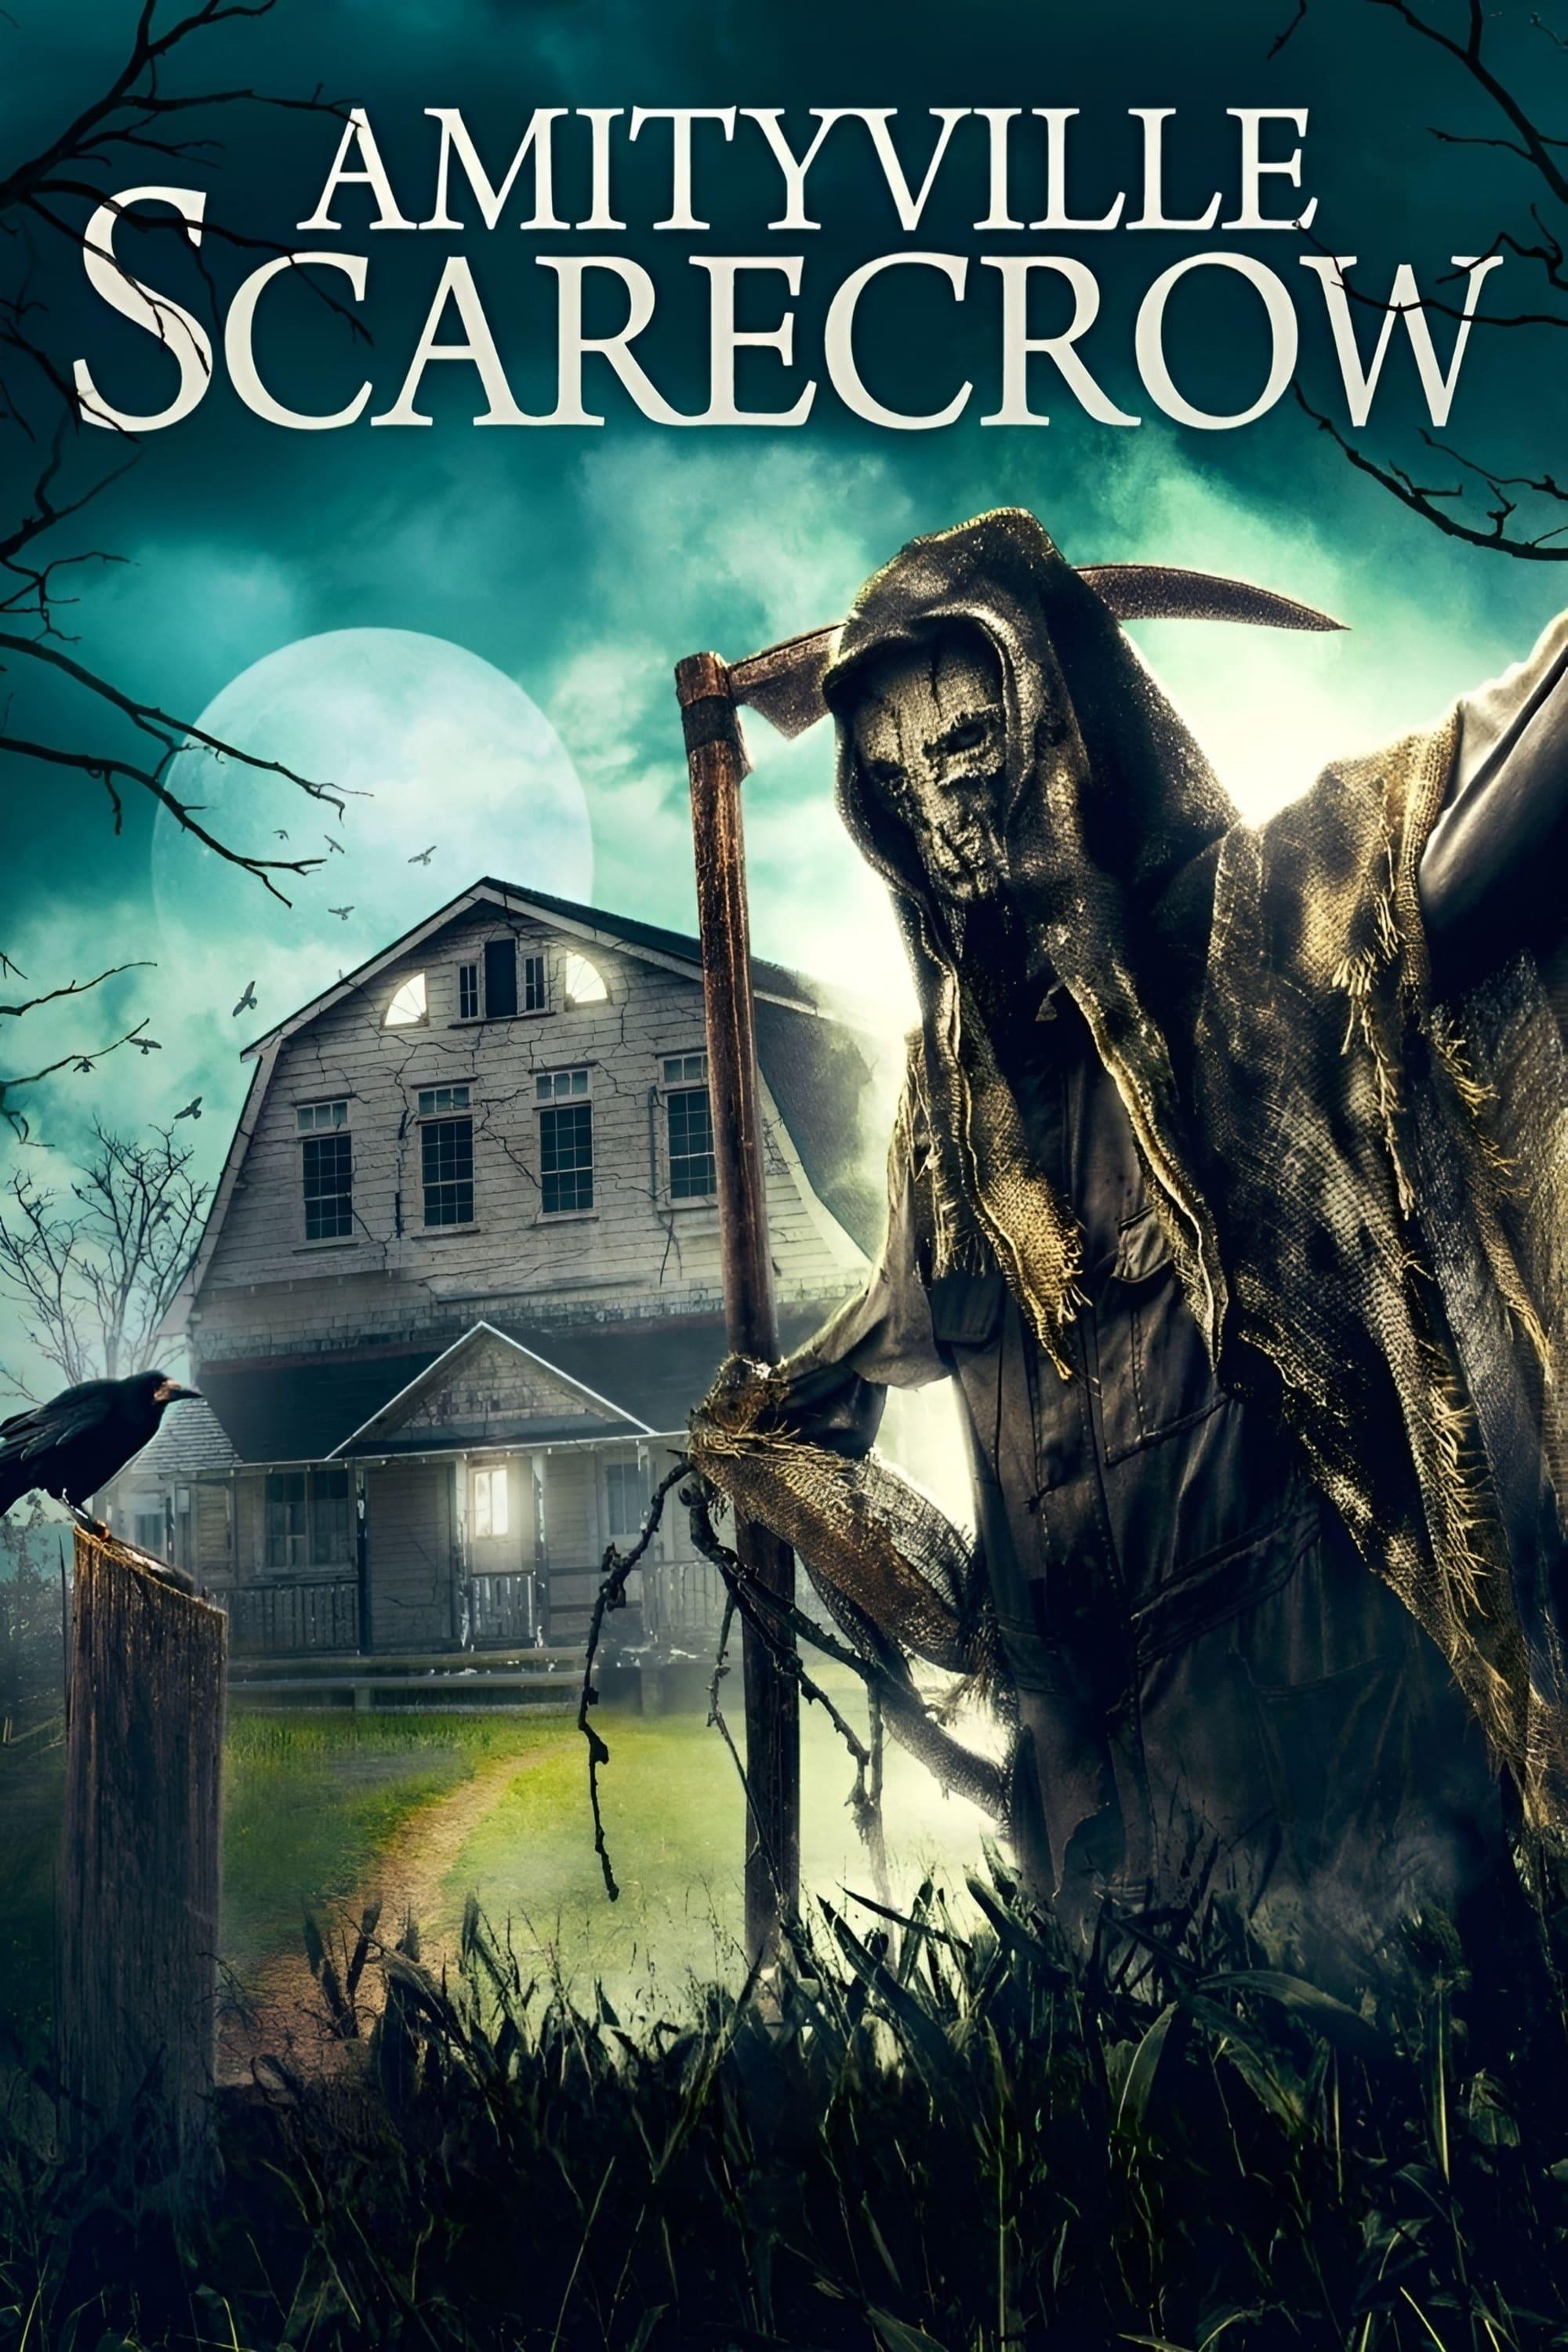 Amityville Scarecrow poster